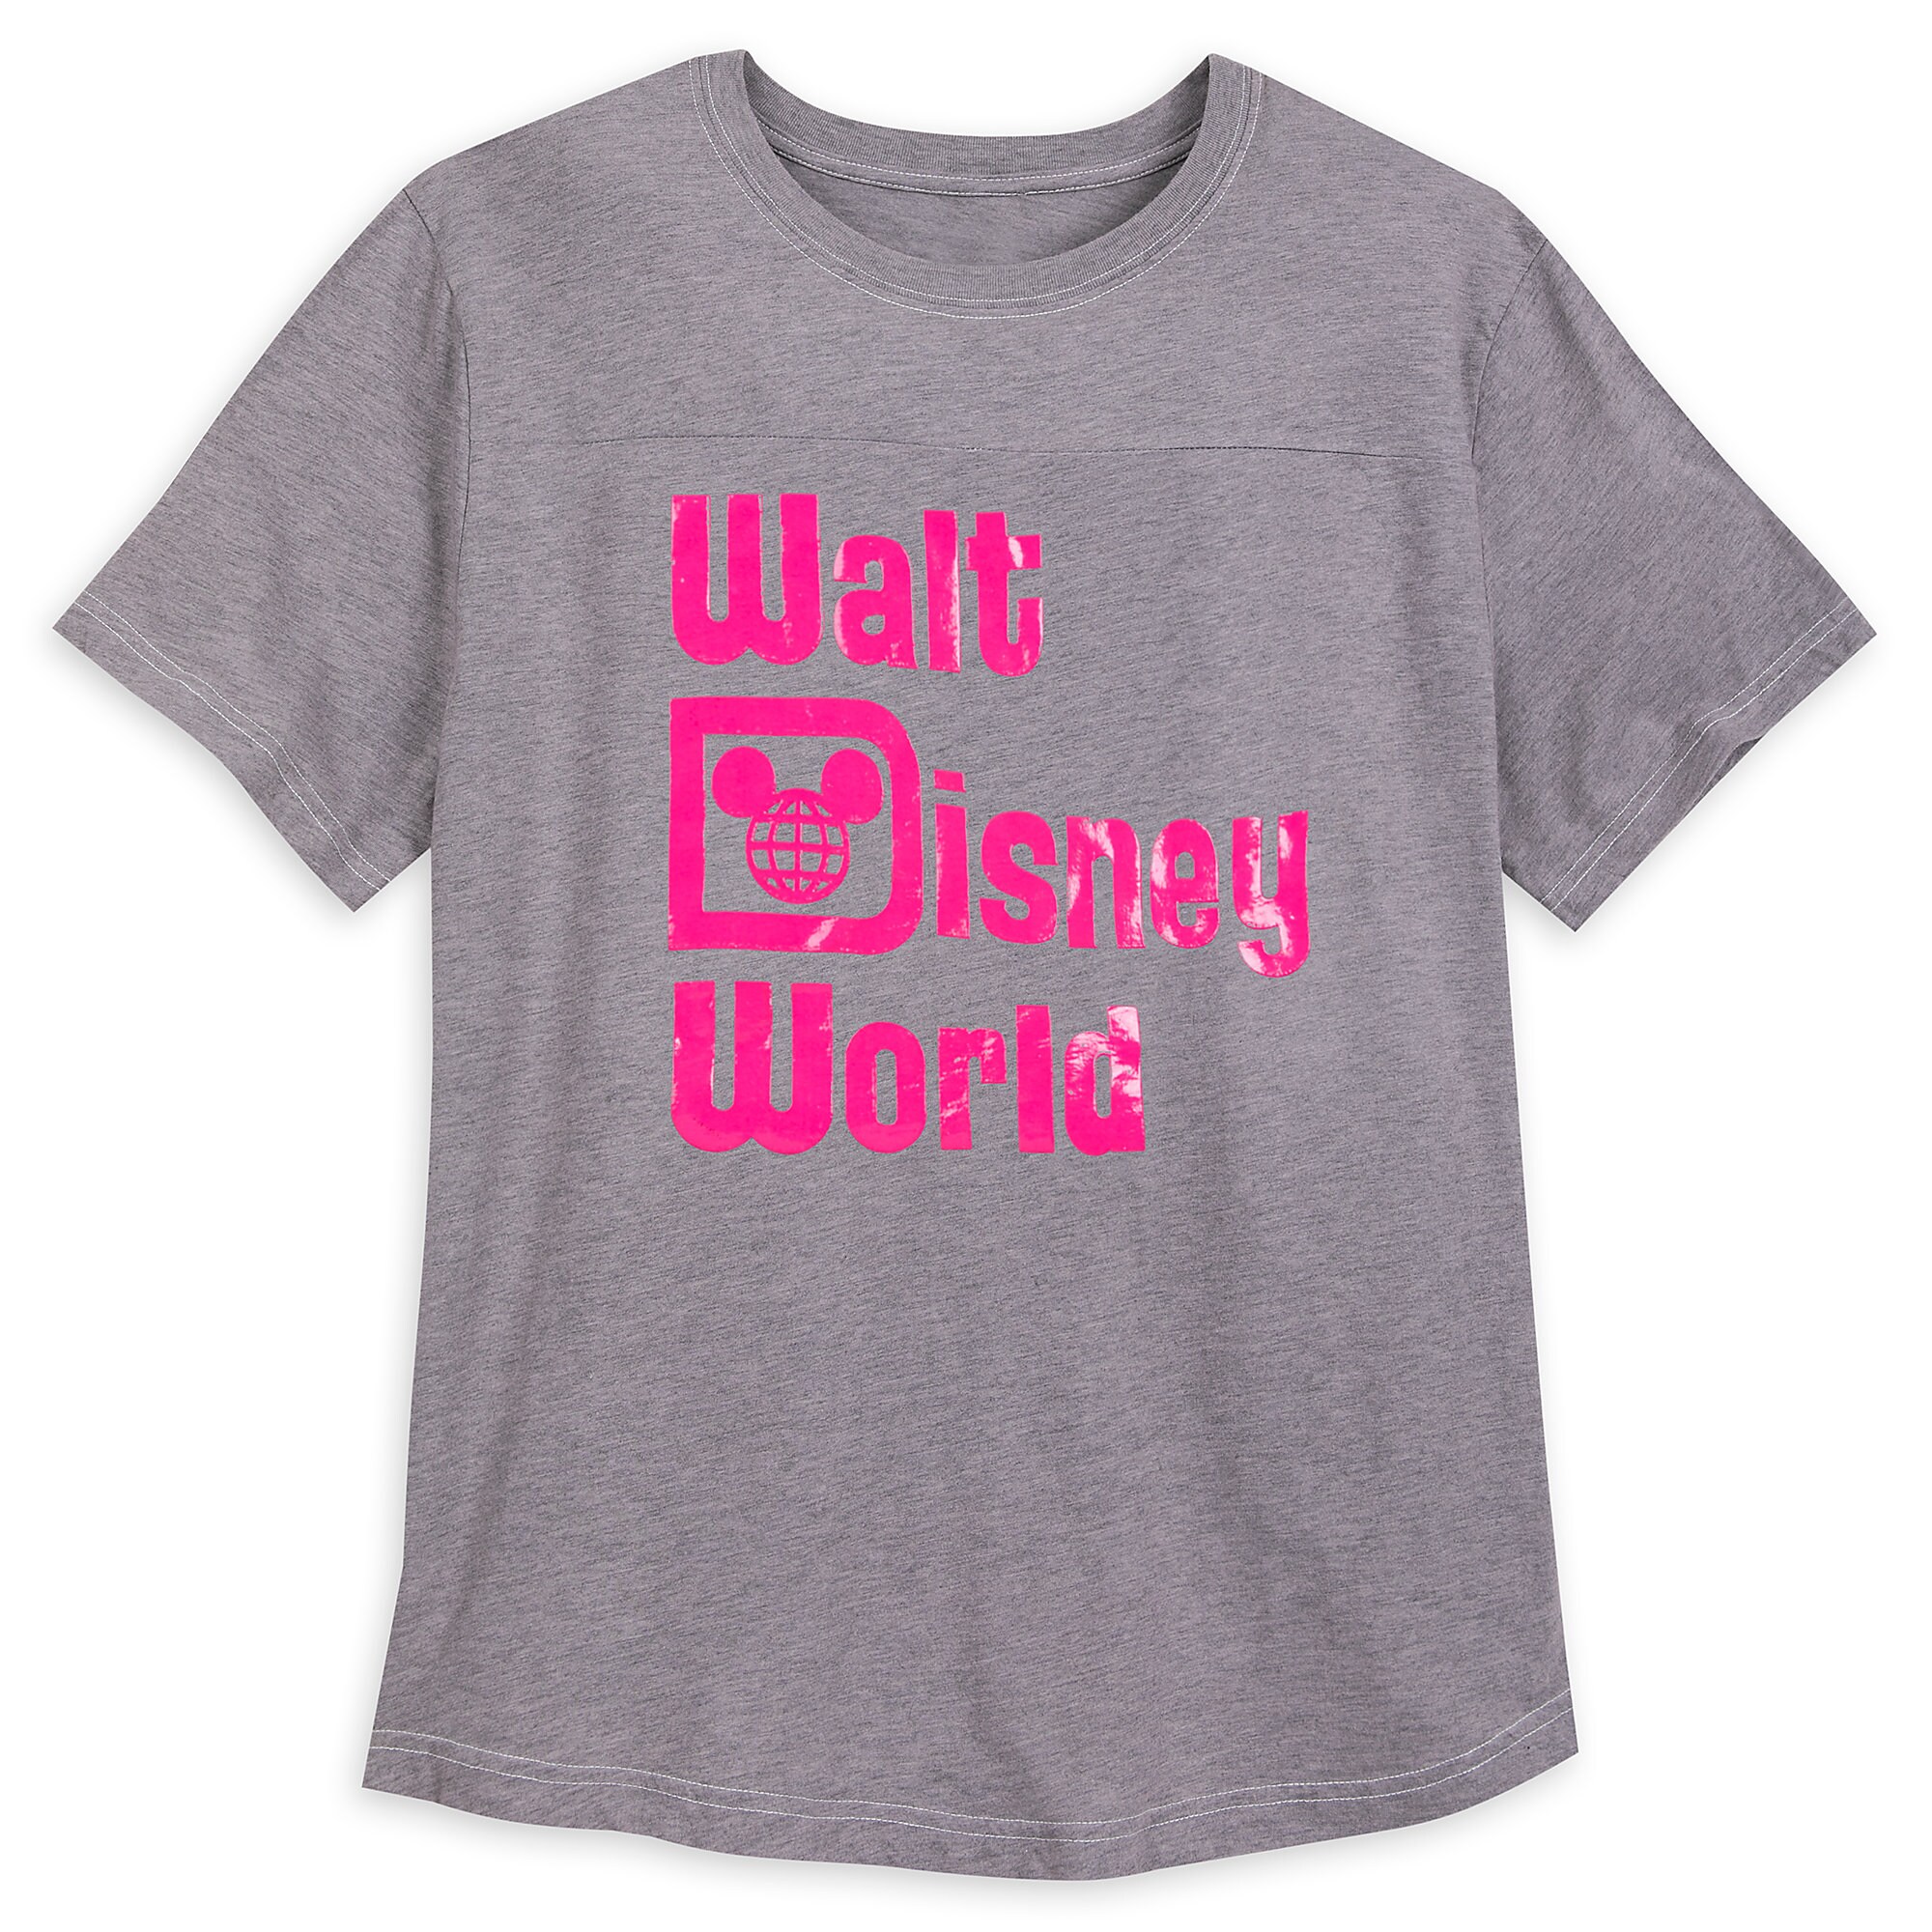 Walt Disney World Logo T-Shirt for Men - Imagination Pink